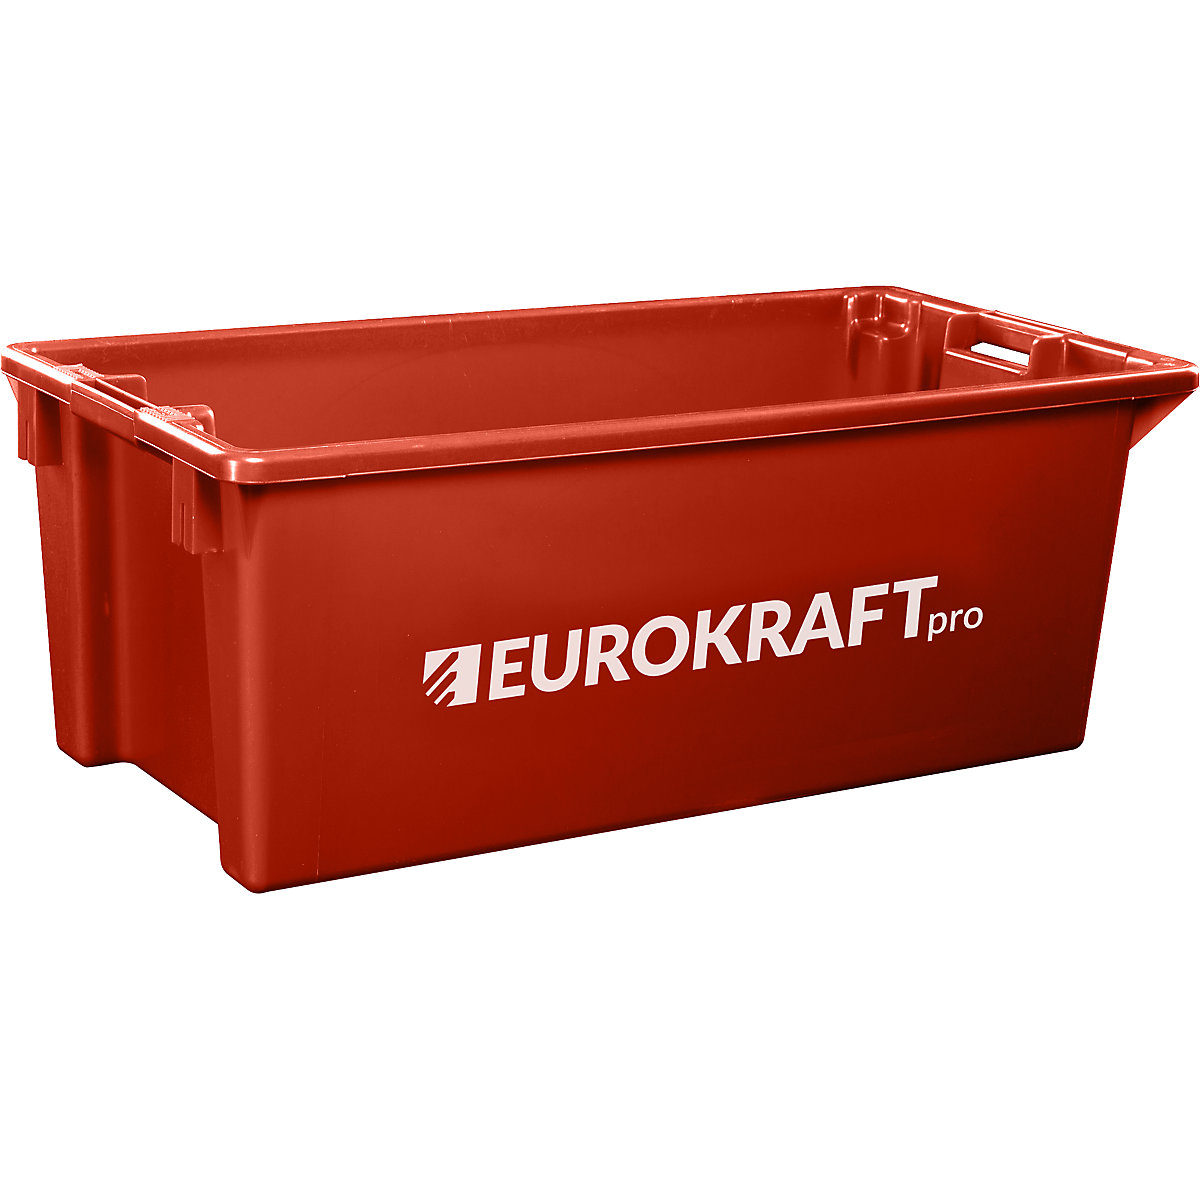 EUROKRAFTpro – apilable por giro polipropileno apto para alimentos: capacidad 13 UE 4 unid. | KAISER+KRAFT